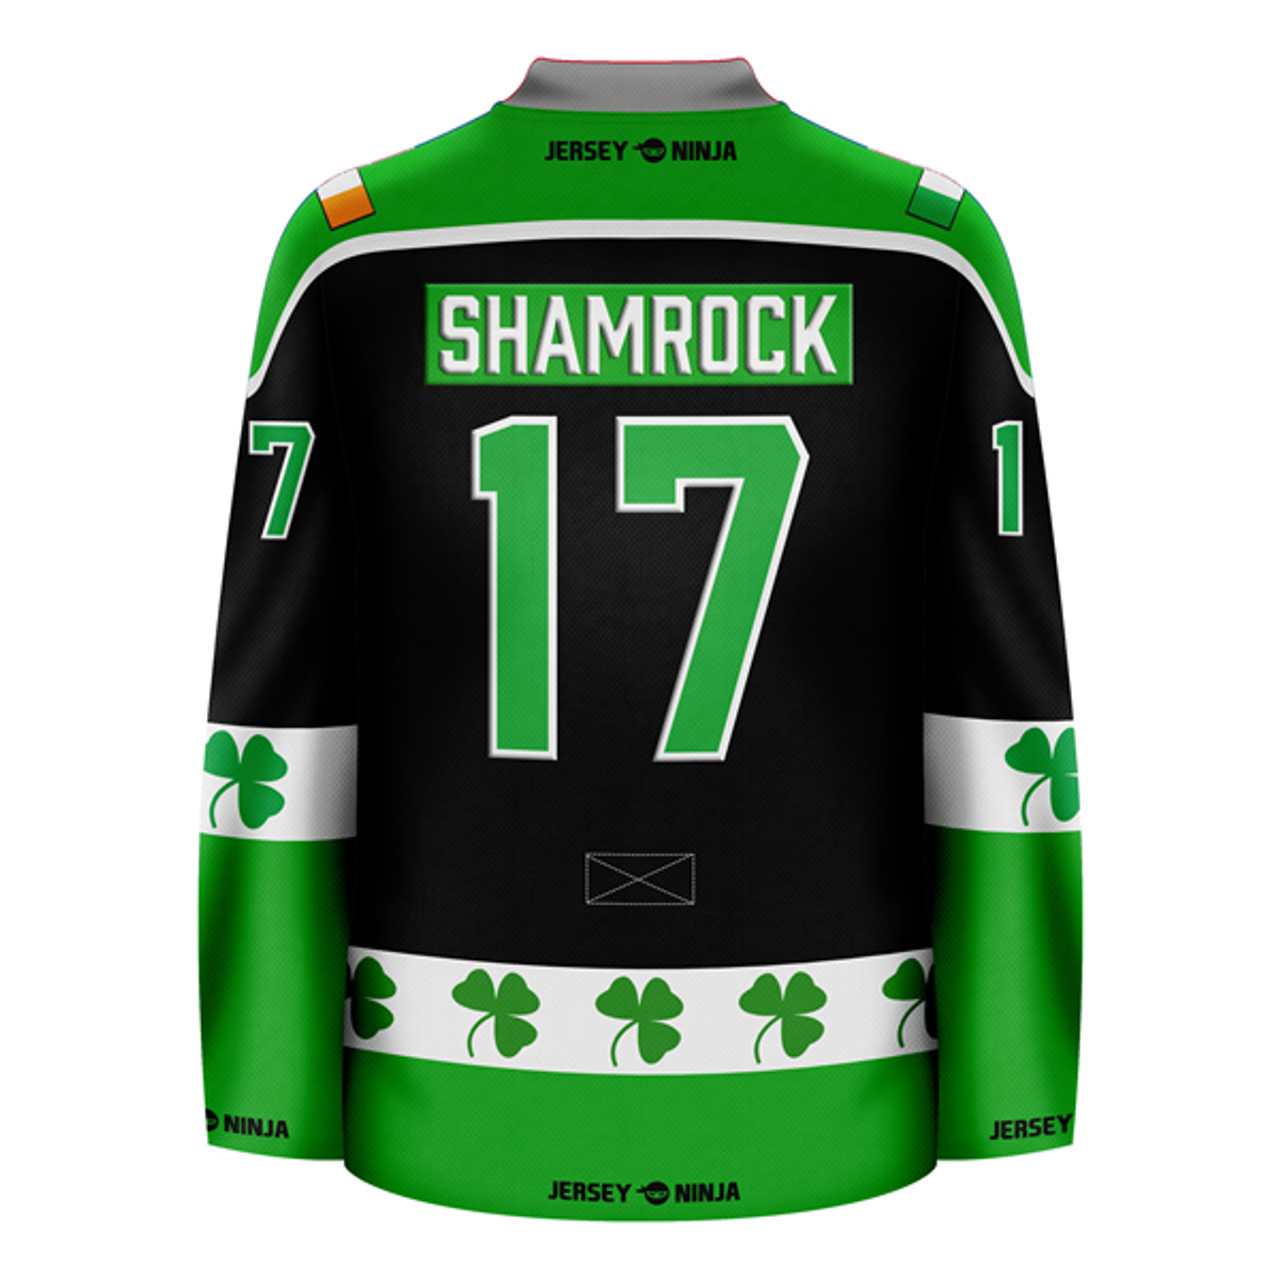 Old Time Hockey Florida Panthers T-Shirt Sz XL Green St. Patricks Day Irish